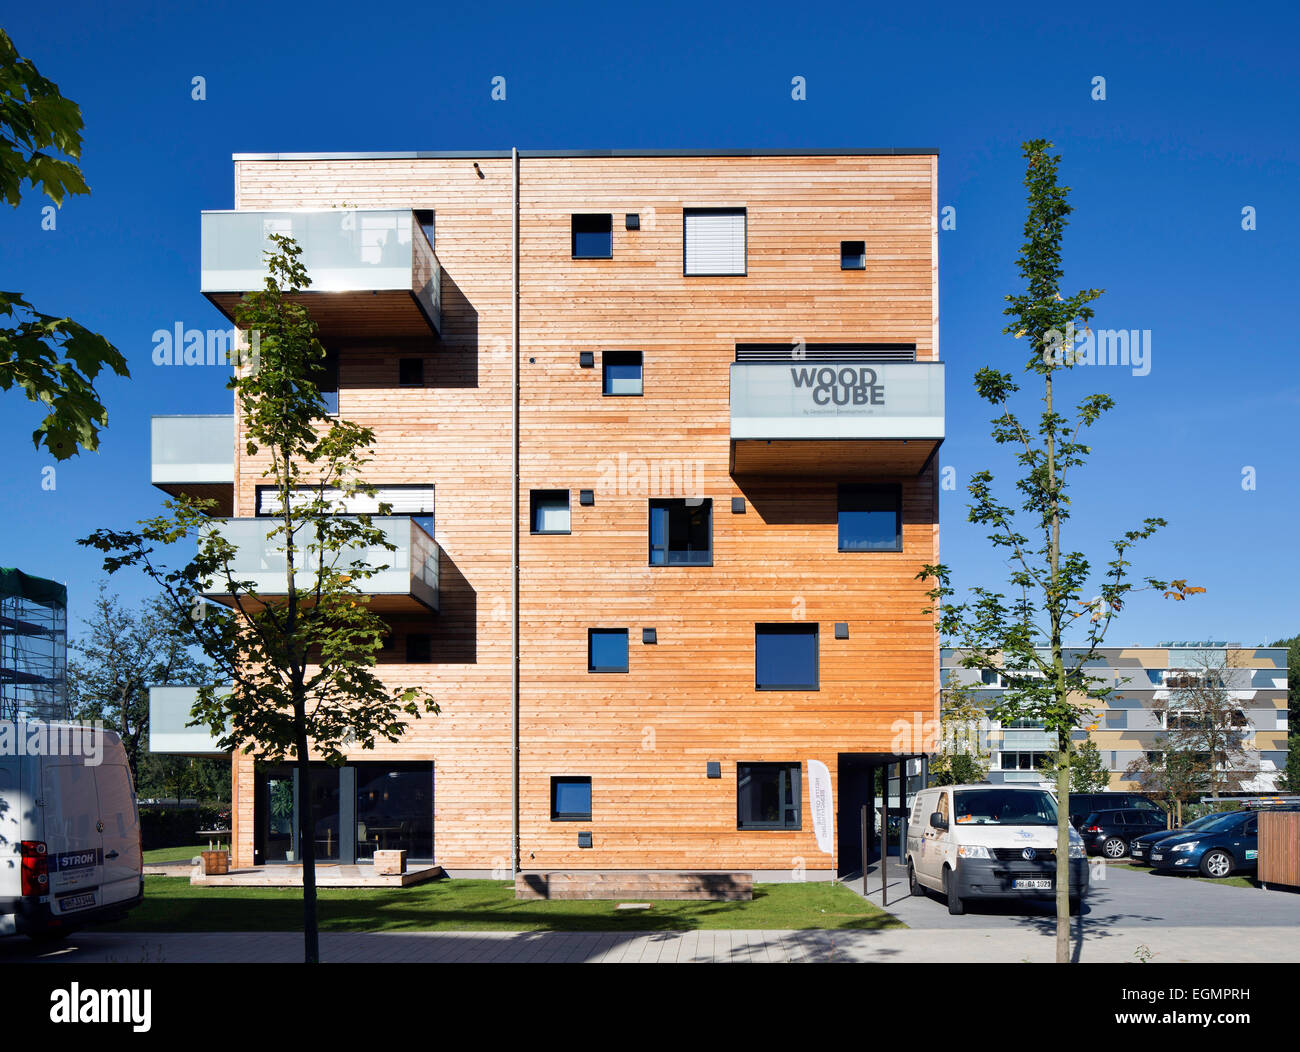 Woodcube residential house, International Building Exhibition Hamburg, Inselpark, Wilhelmsburg, Hamburg, Germany Stock Photo